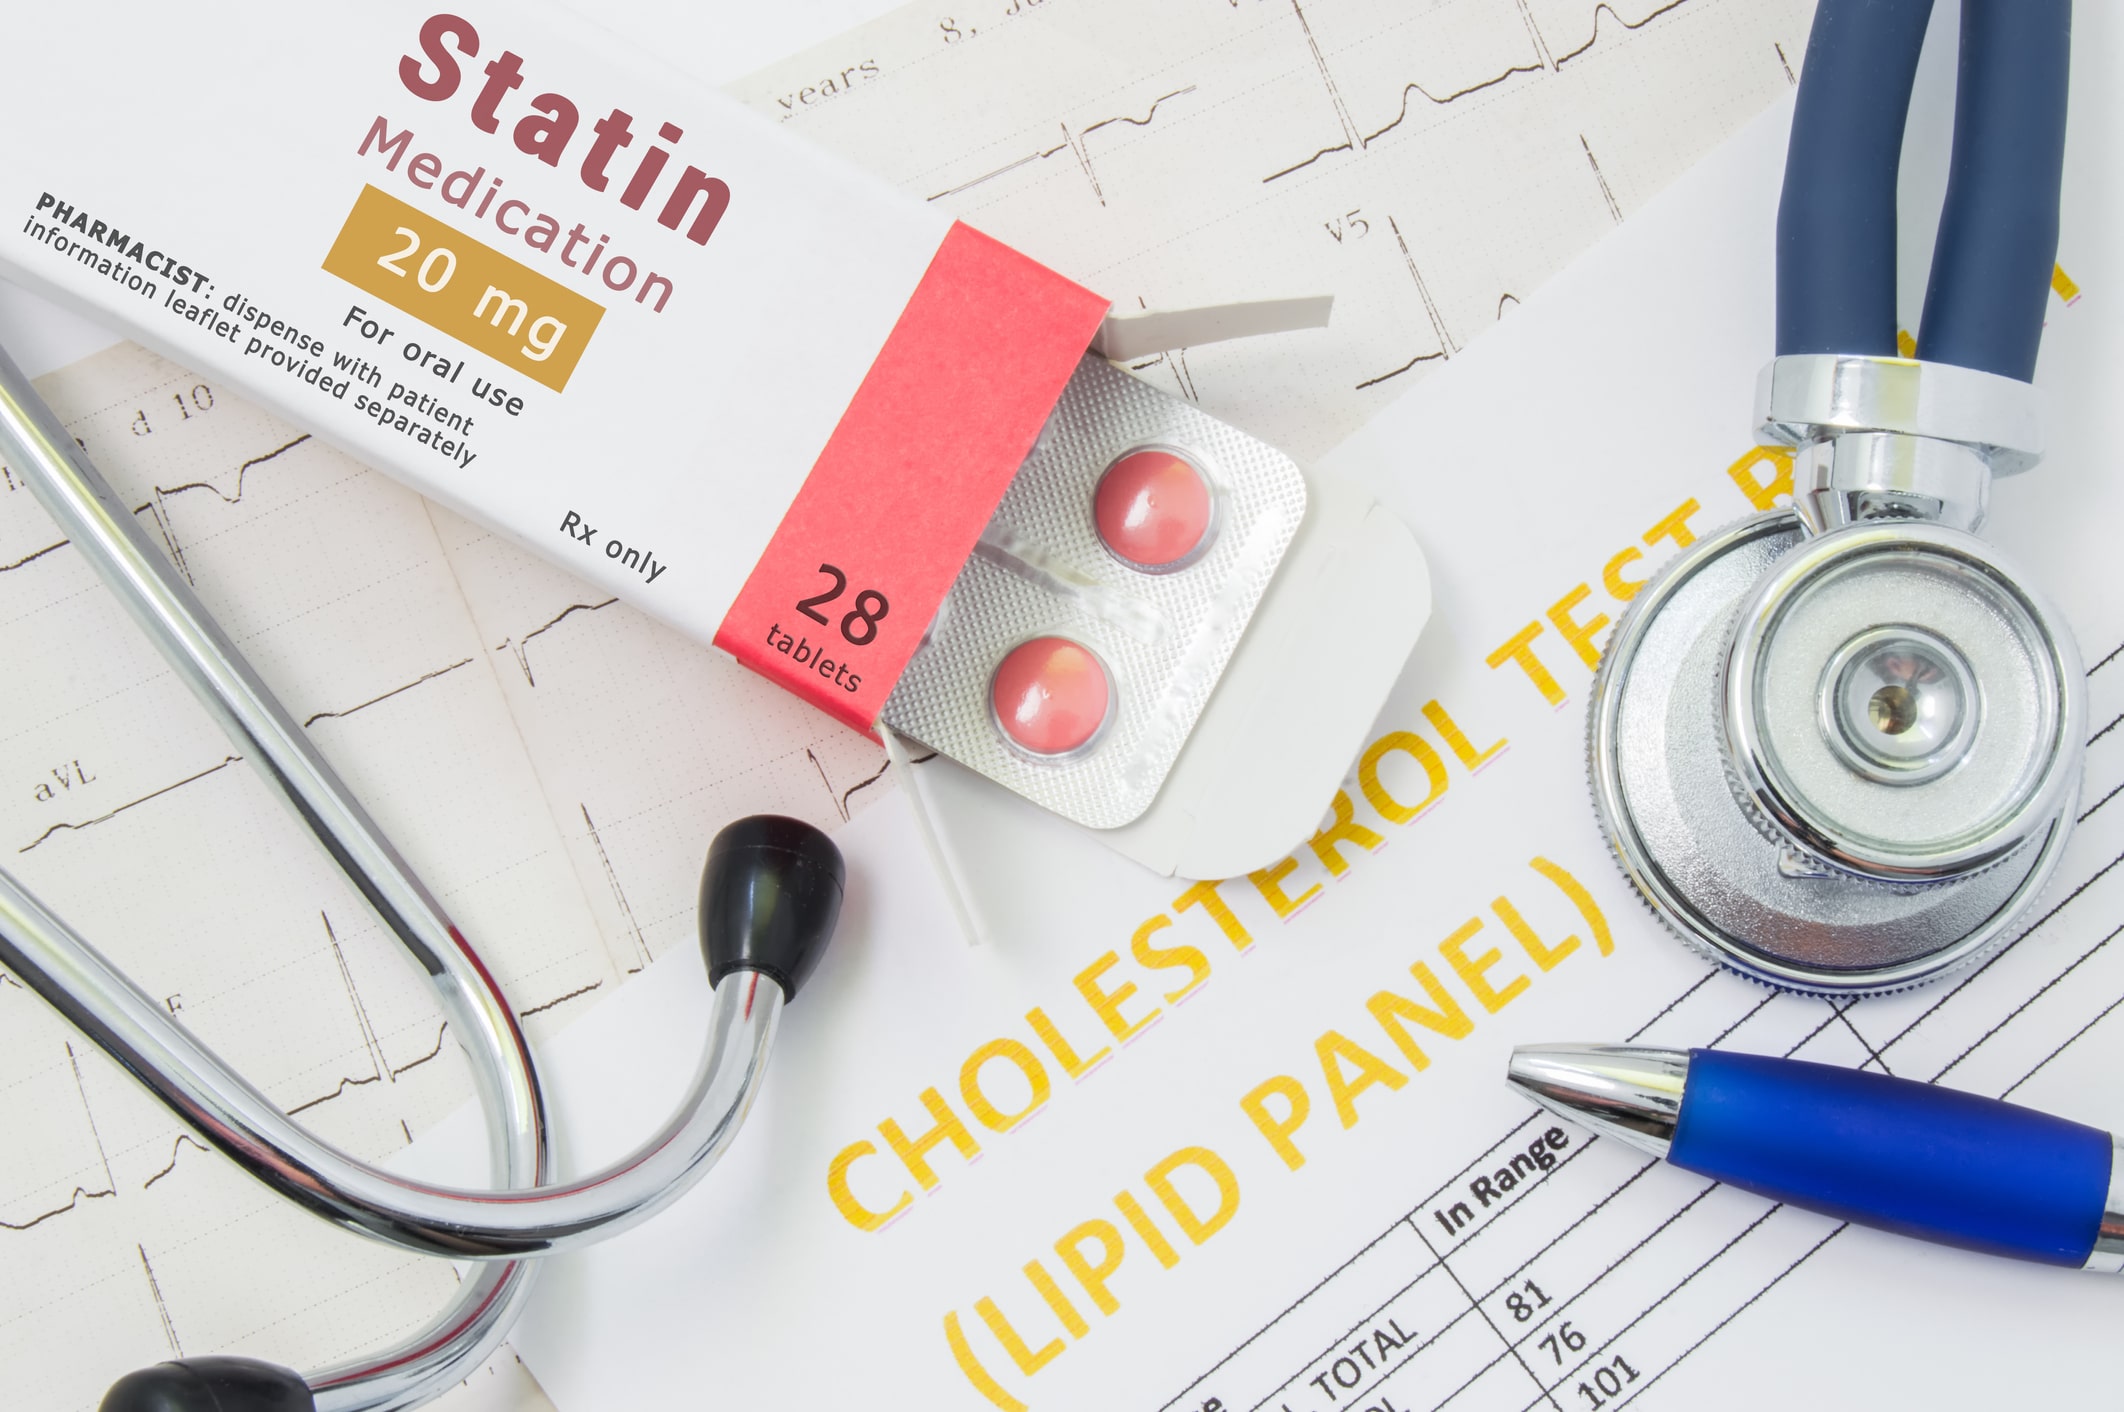 Statins Help Lower Cholesterol b...